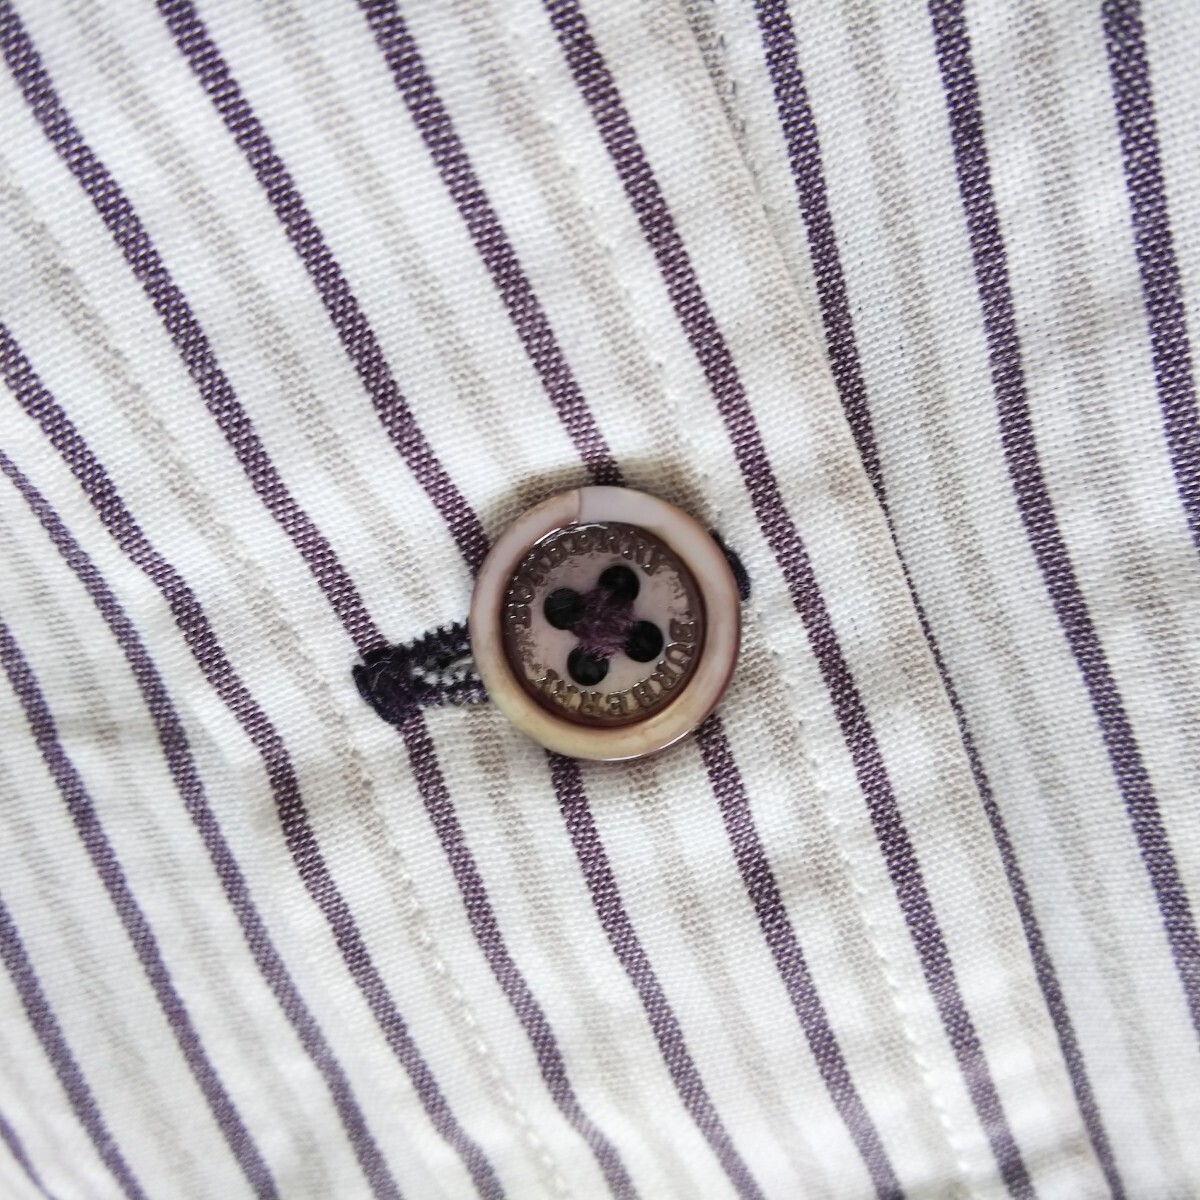 [ beautiful goods L] Burberry London short sleeves shirt . road hose Mark stripe Logo button BURBERRYLONDON tops T-shirt 